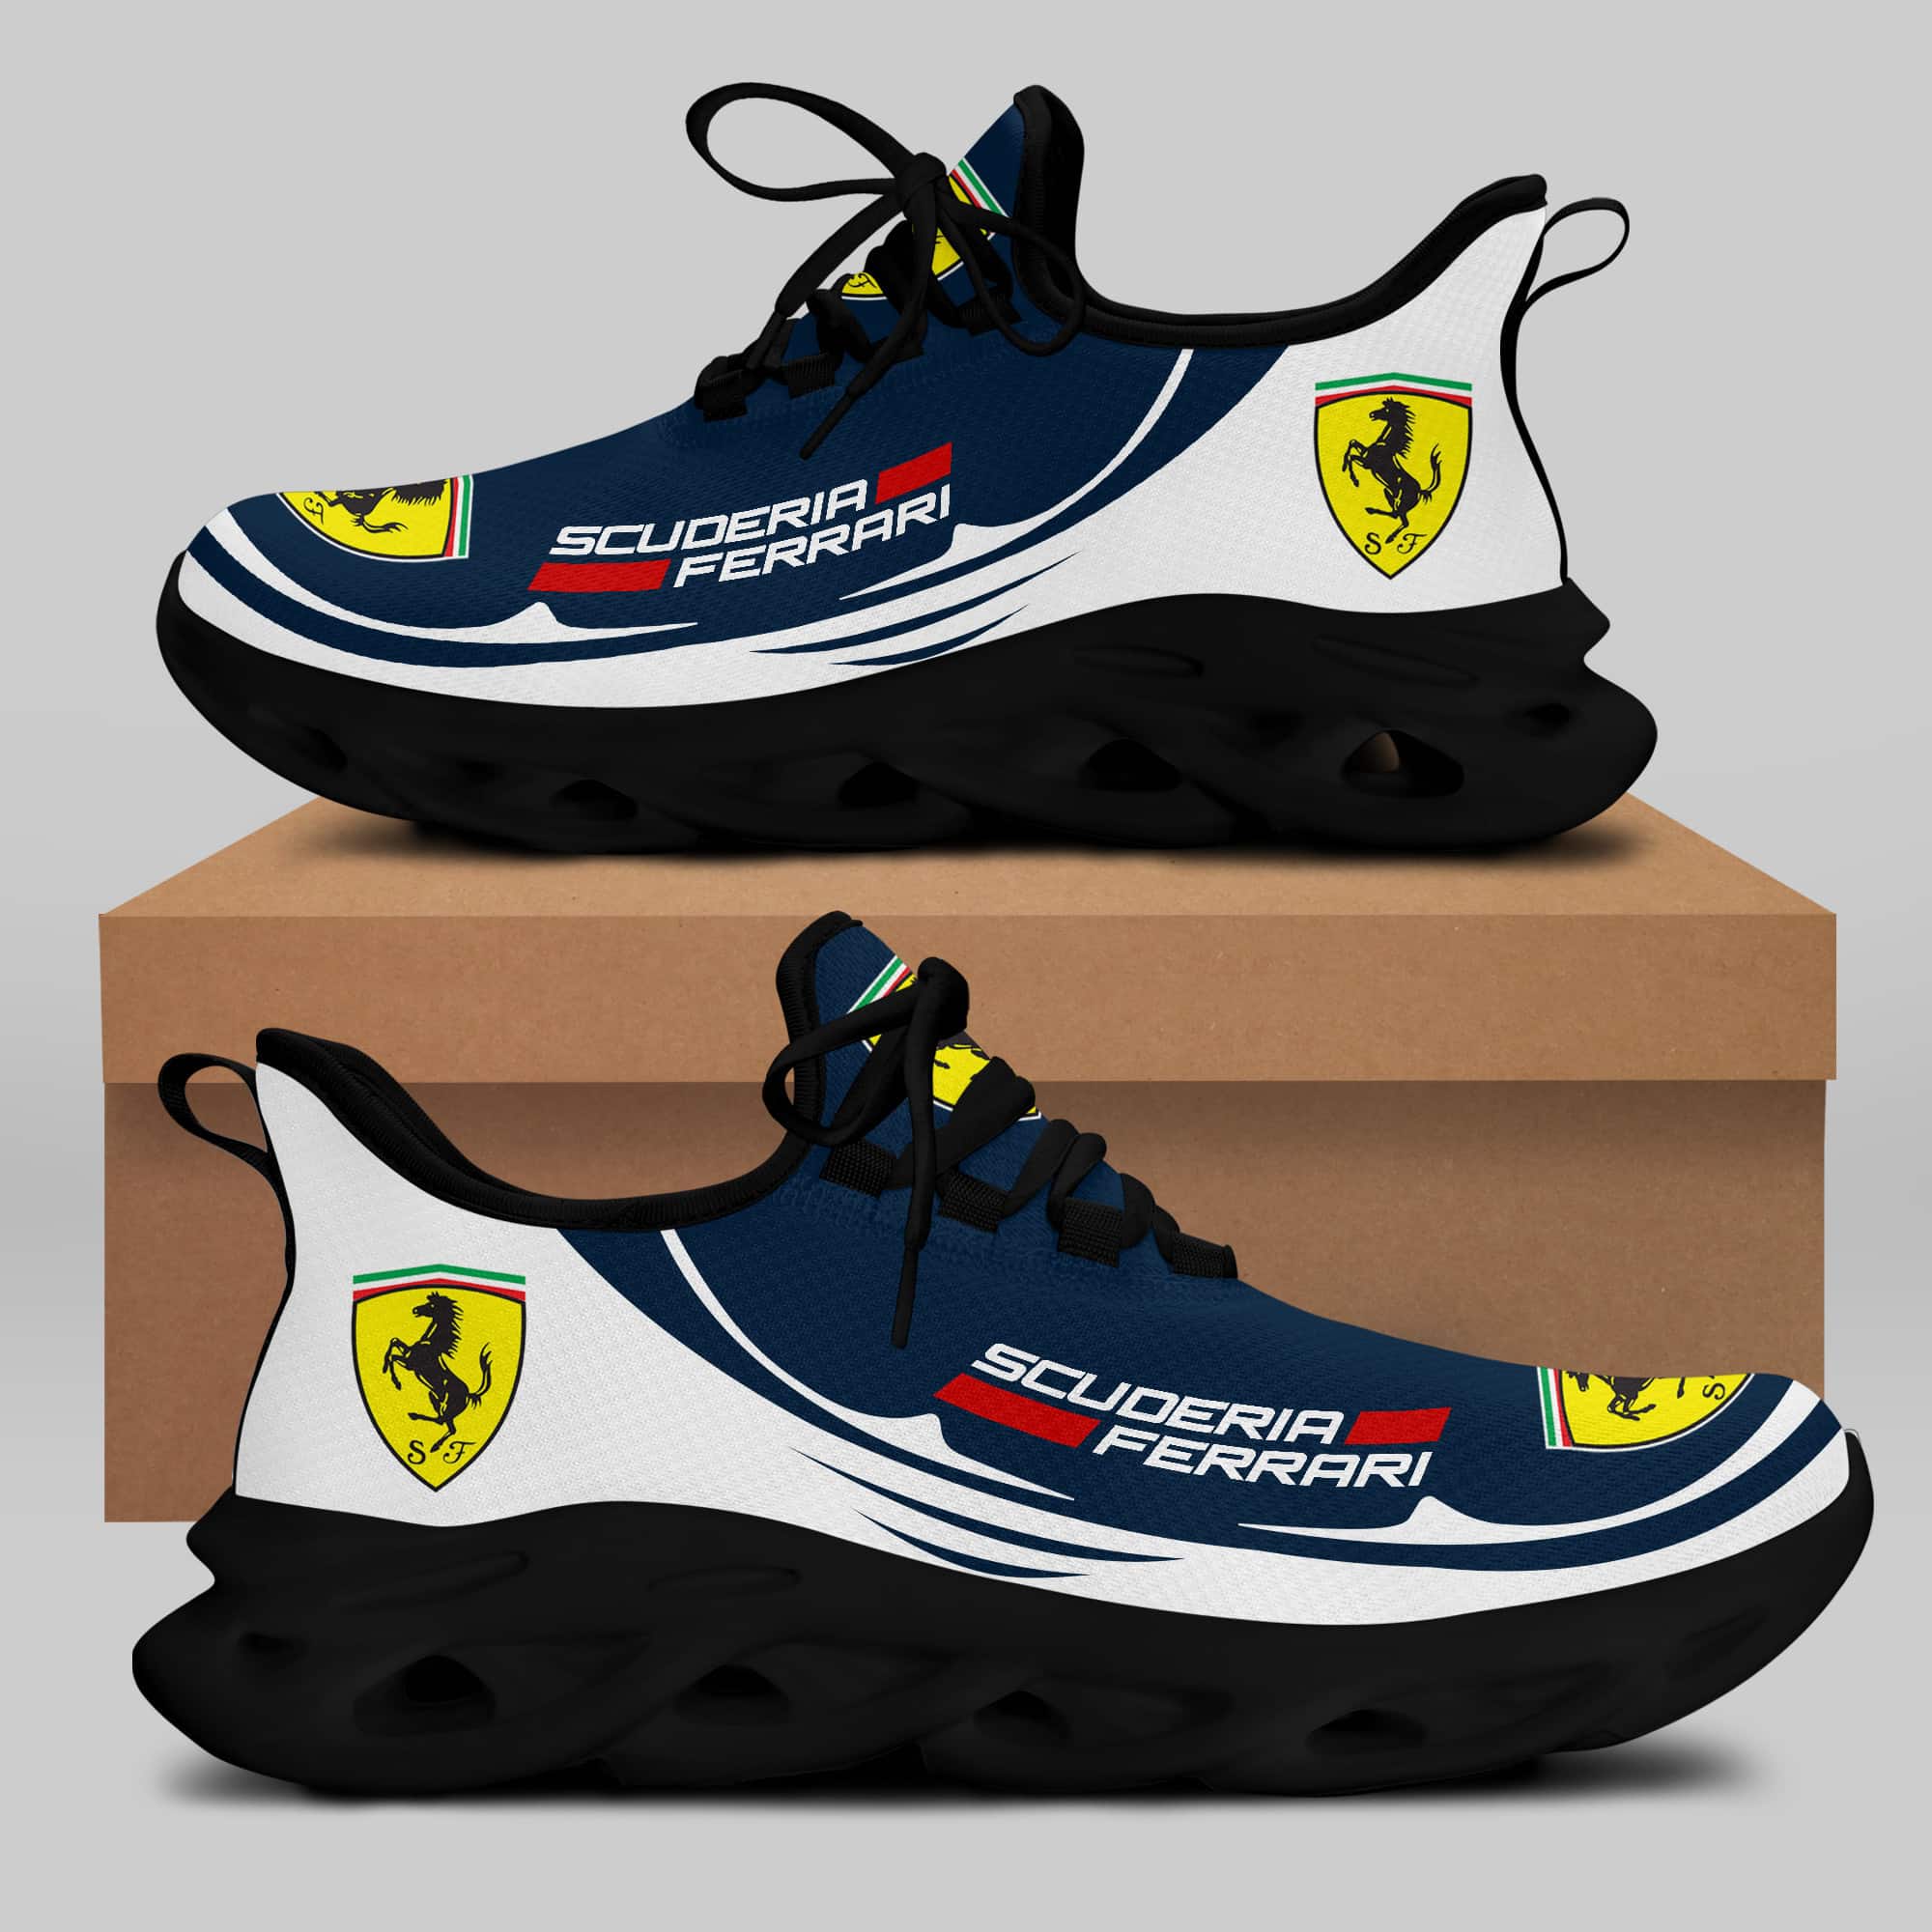 Ferrari Sneaker Running Shoes Max Soul Shoes Sneakers Ver 28 2